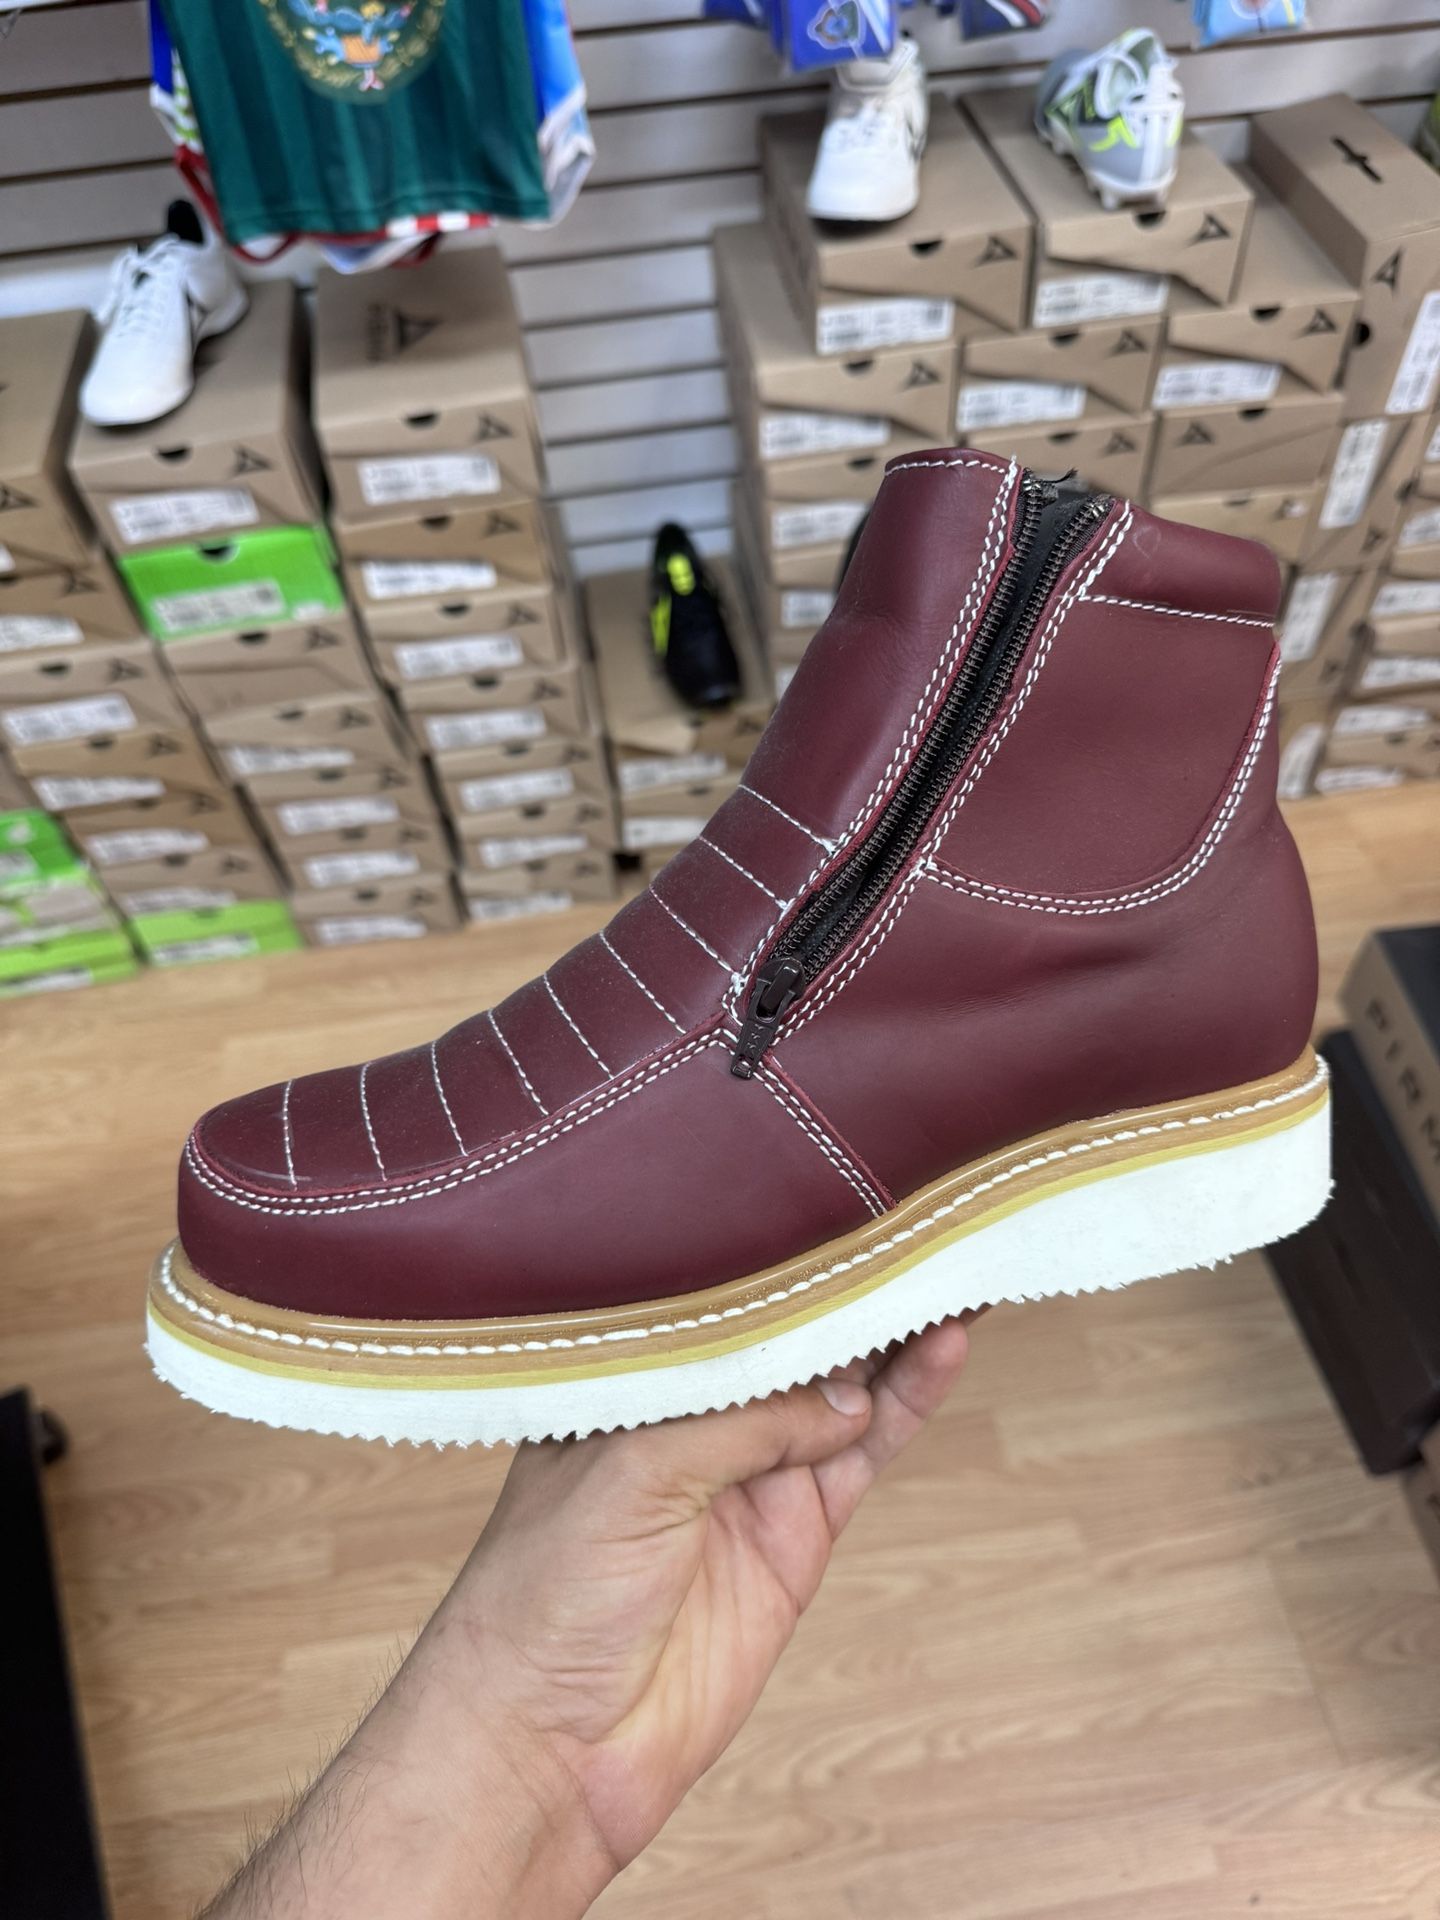 El General Zipper Leather Work Boots Wine Size 9.5